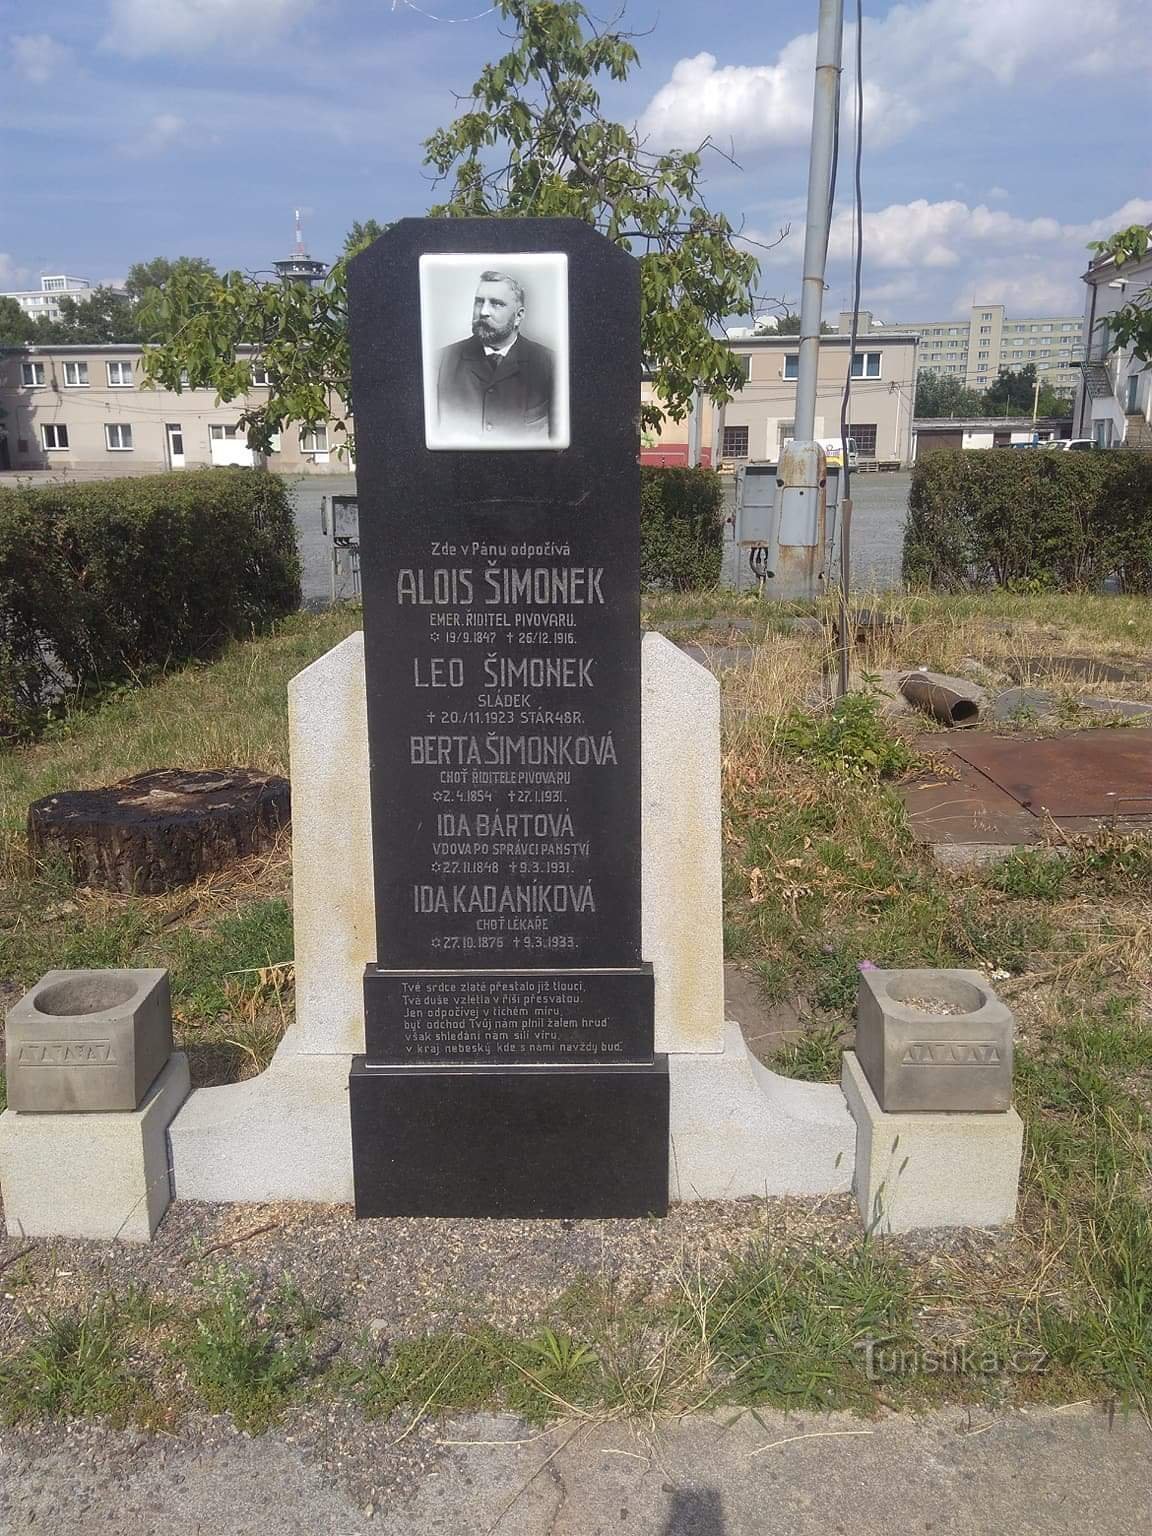 Надгробие Алоиса Шимонека - отца пива Porter